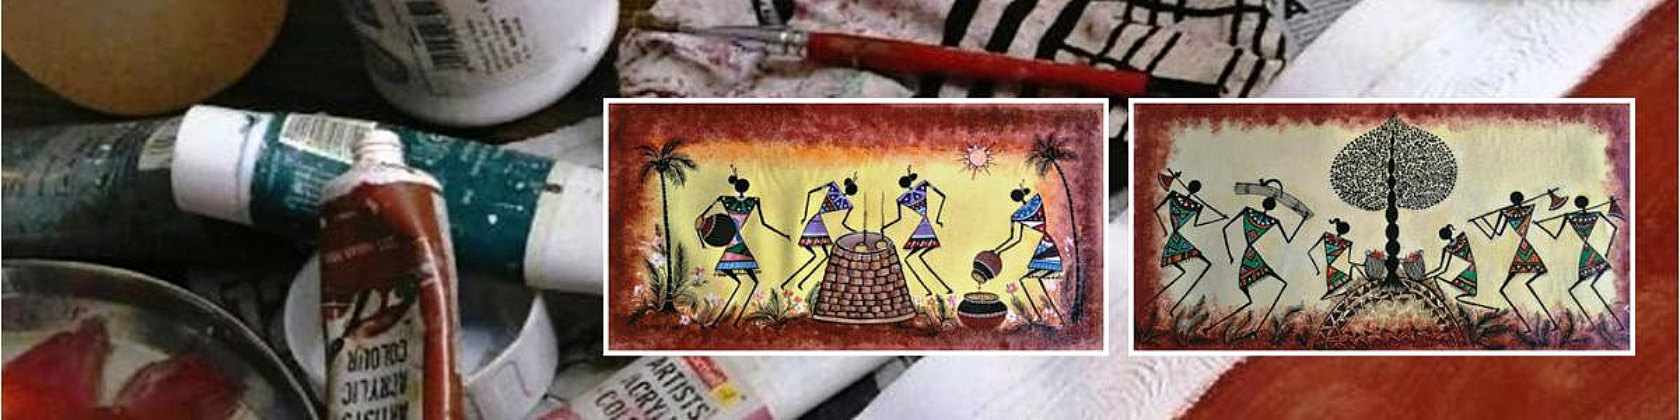 FOR SALE - Original Warli-Art paintings on canvas